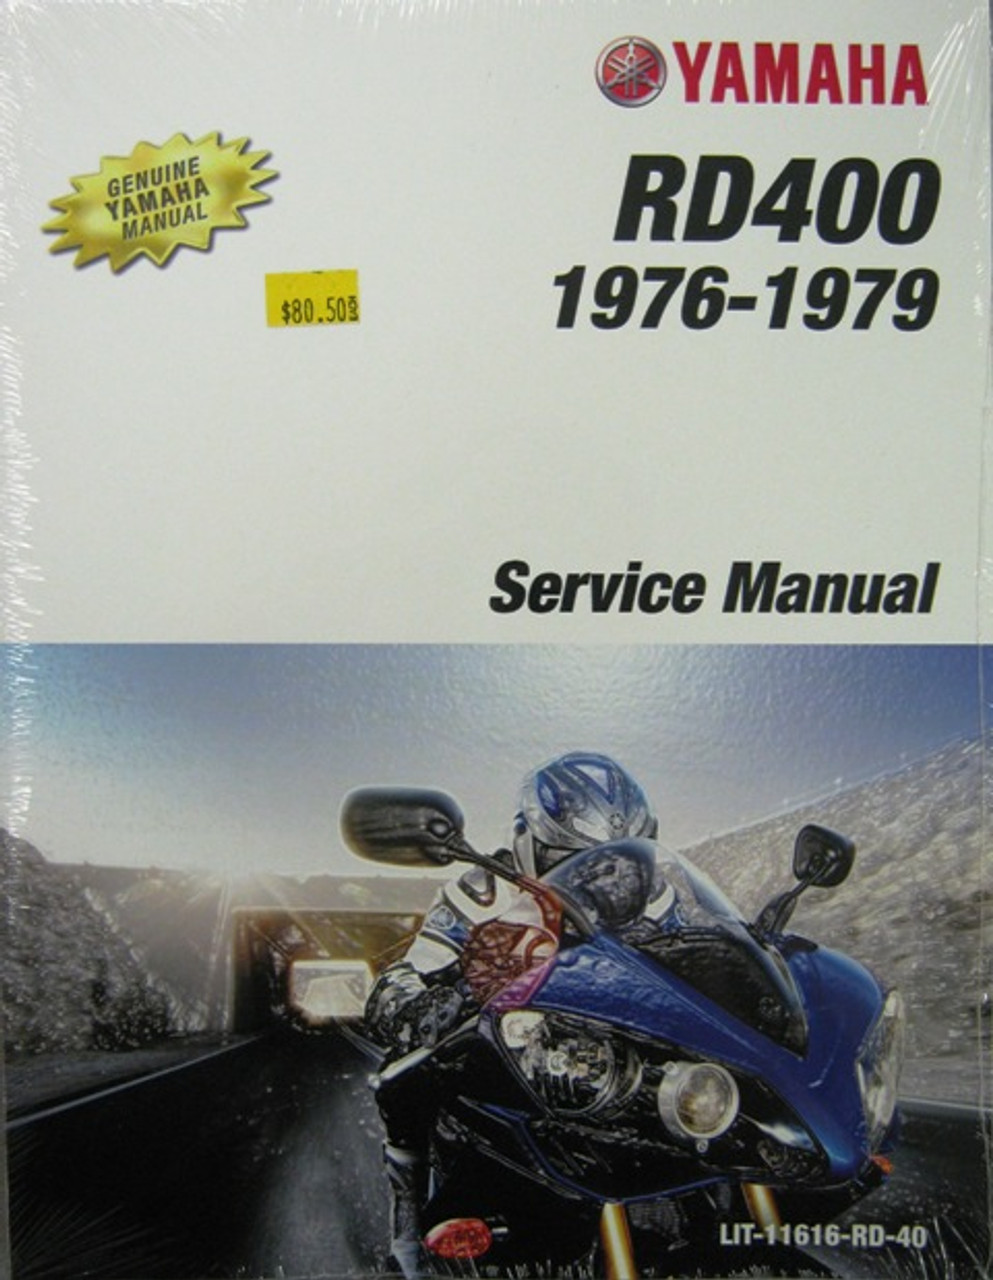 Yamaha Service Manual for Yamaha RD400 LIT-11616-RD-40